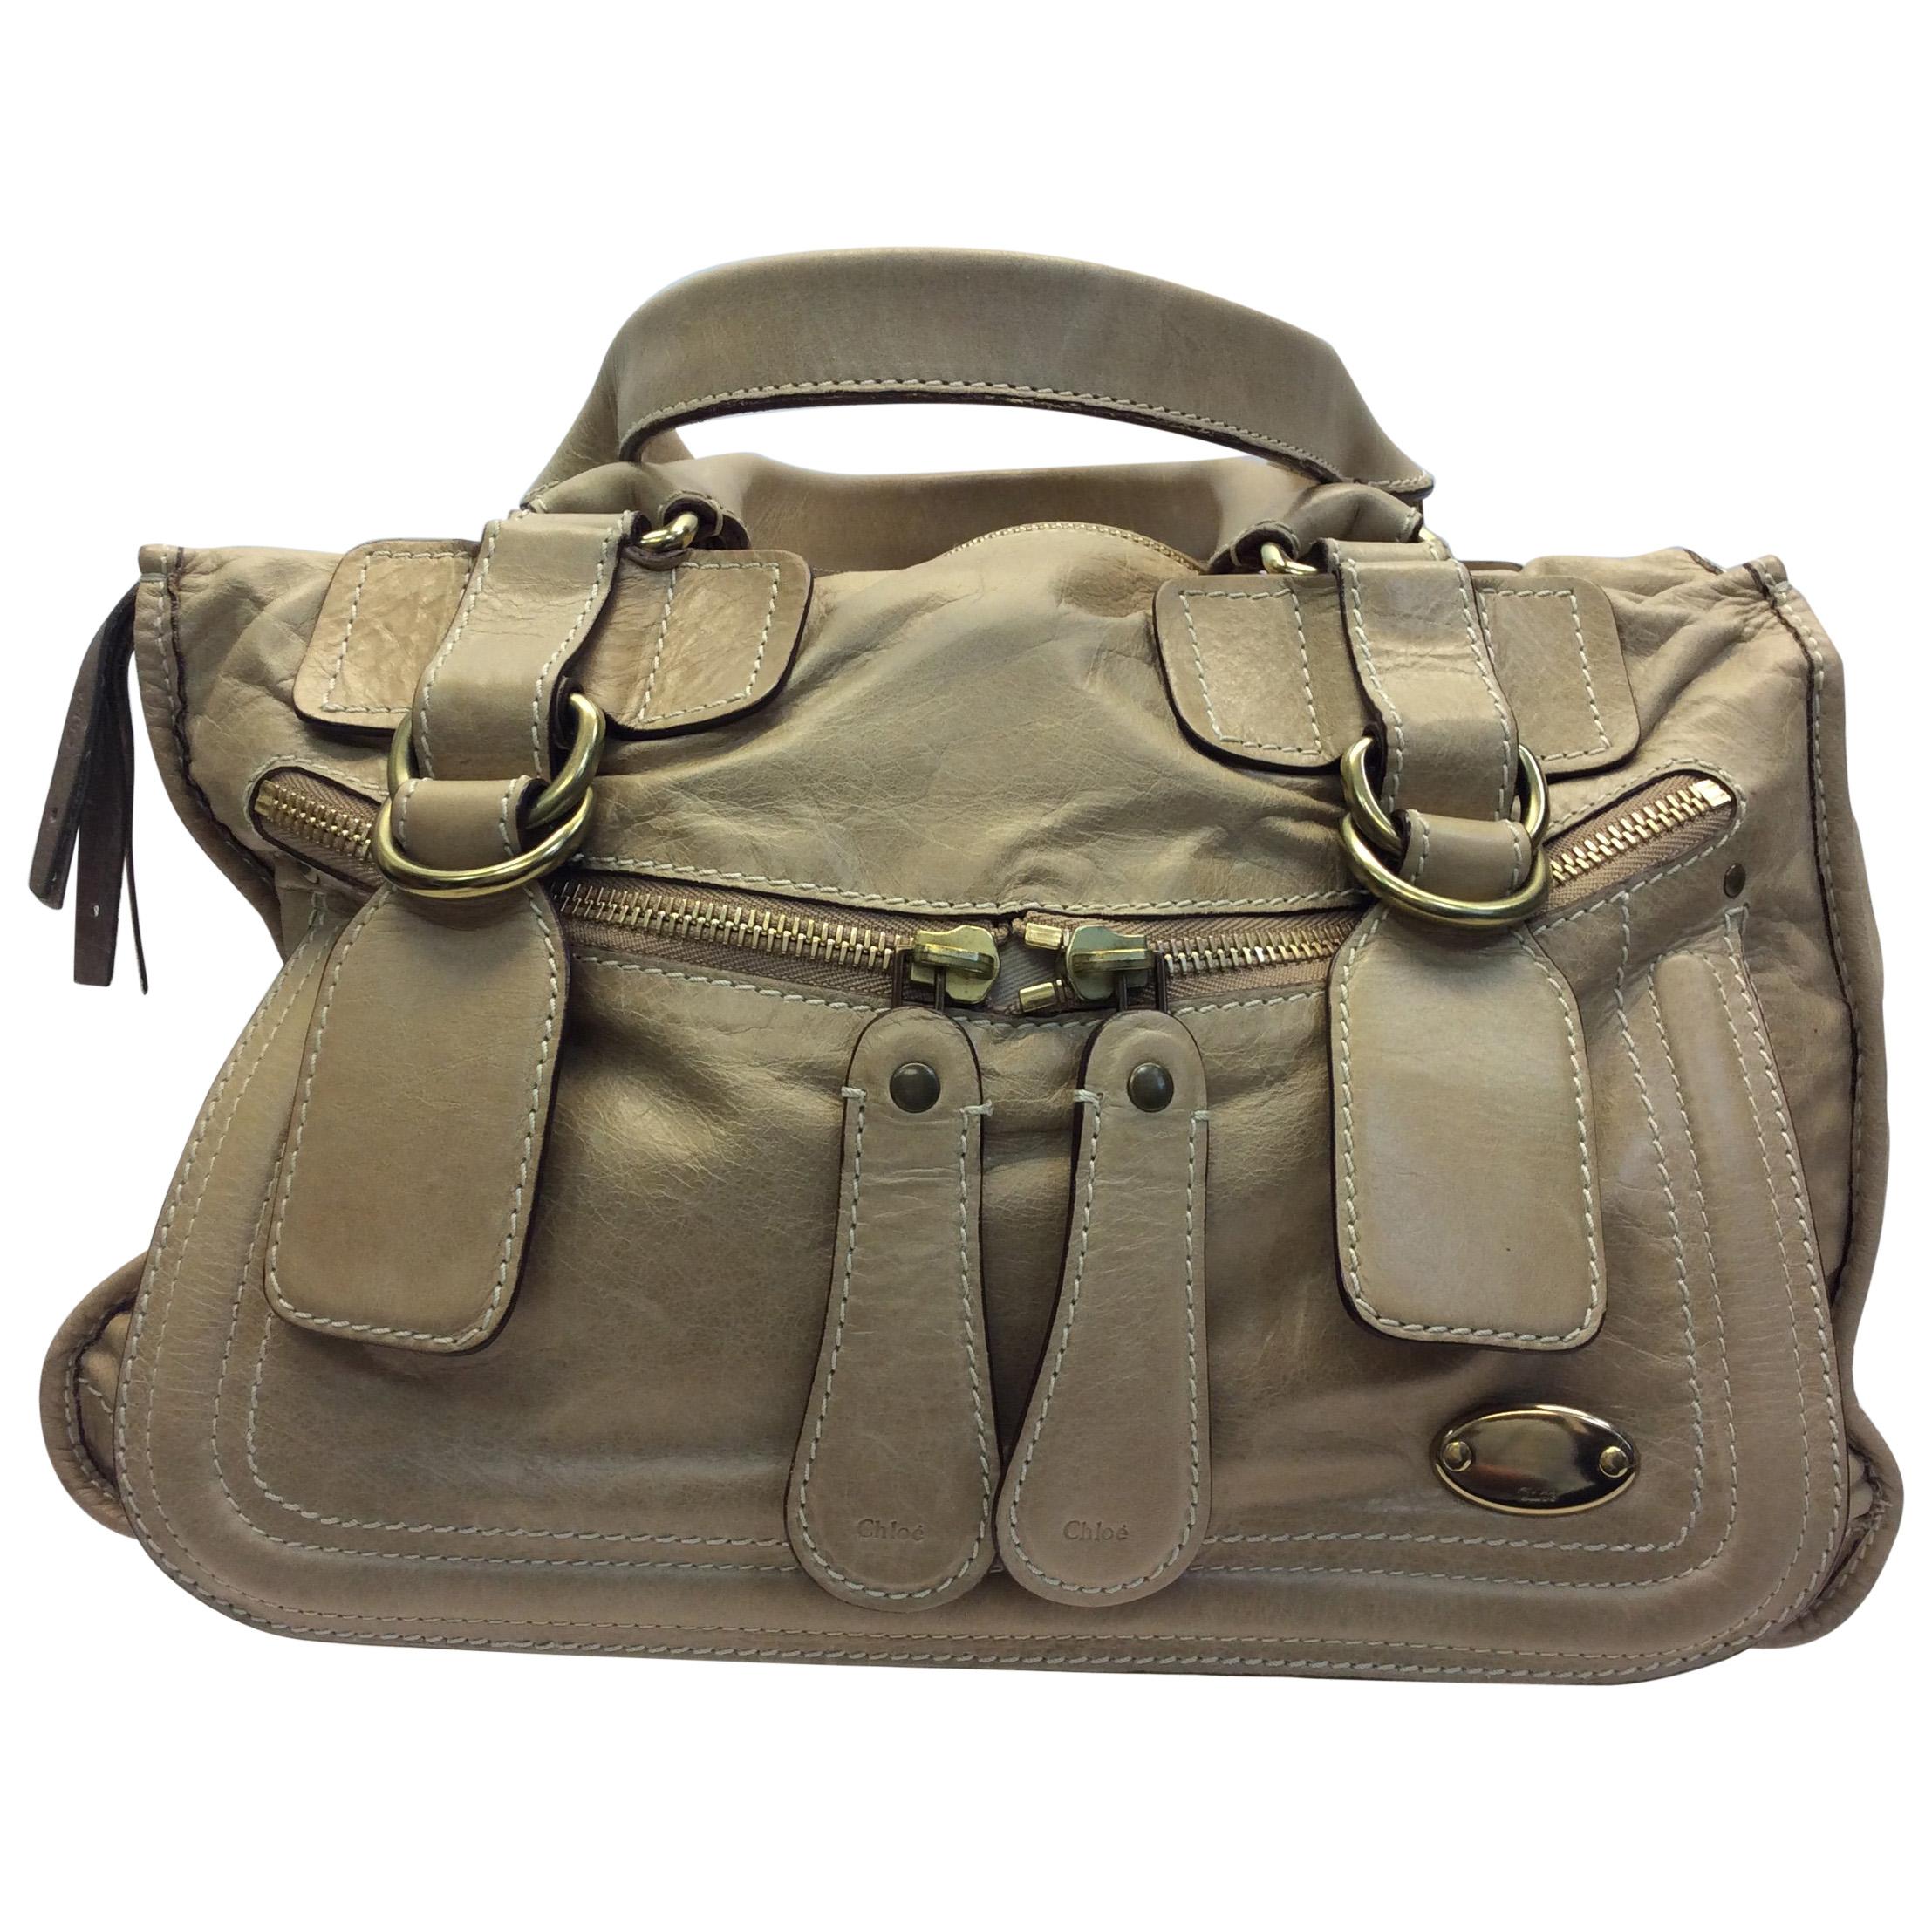 Chloe Tan Leather Handbag For Sale